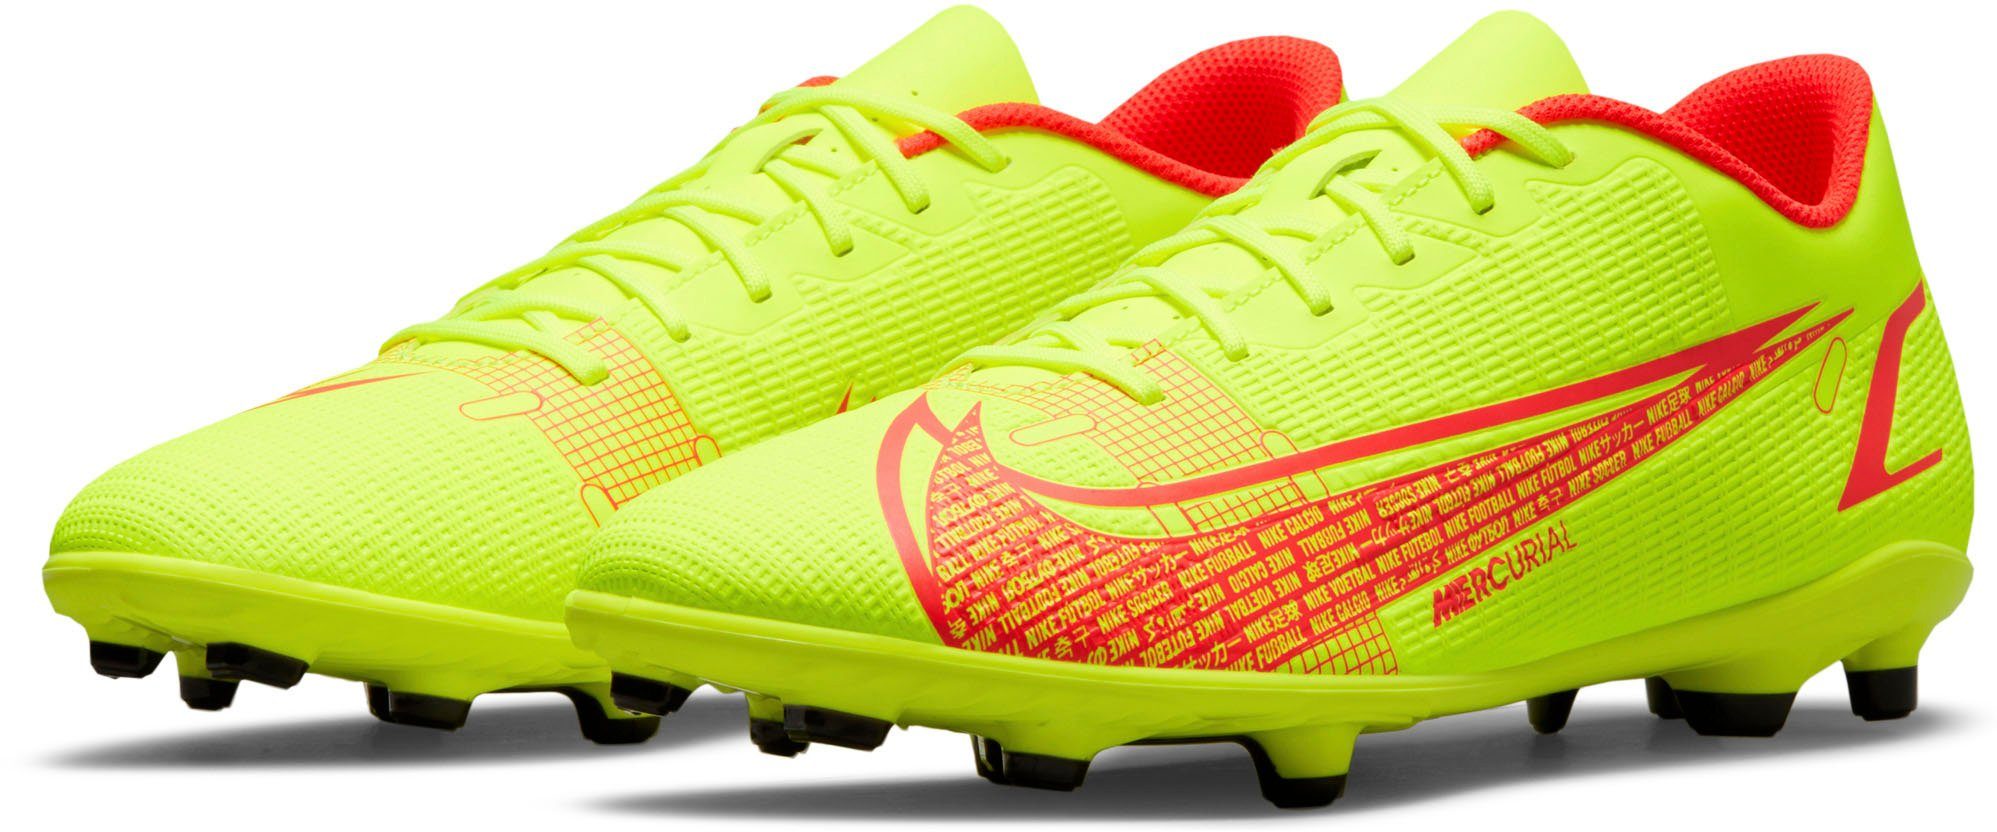 Nike »VAPOR 14 CLUB FG/MG« Fußballschuh kaufen | OTTO